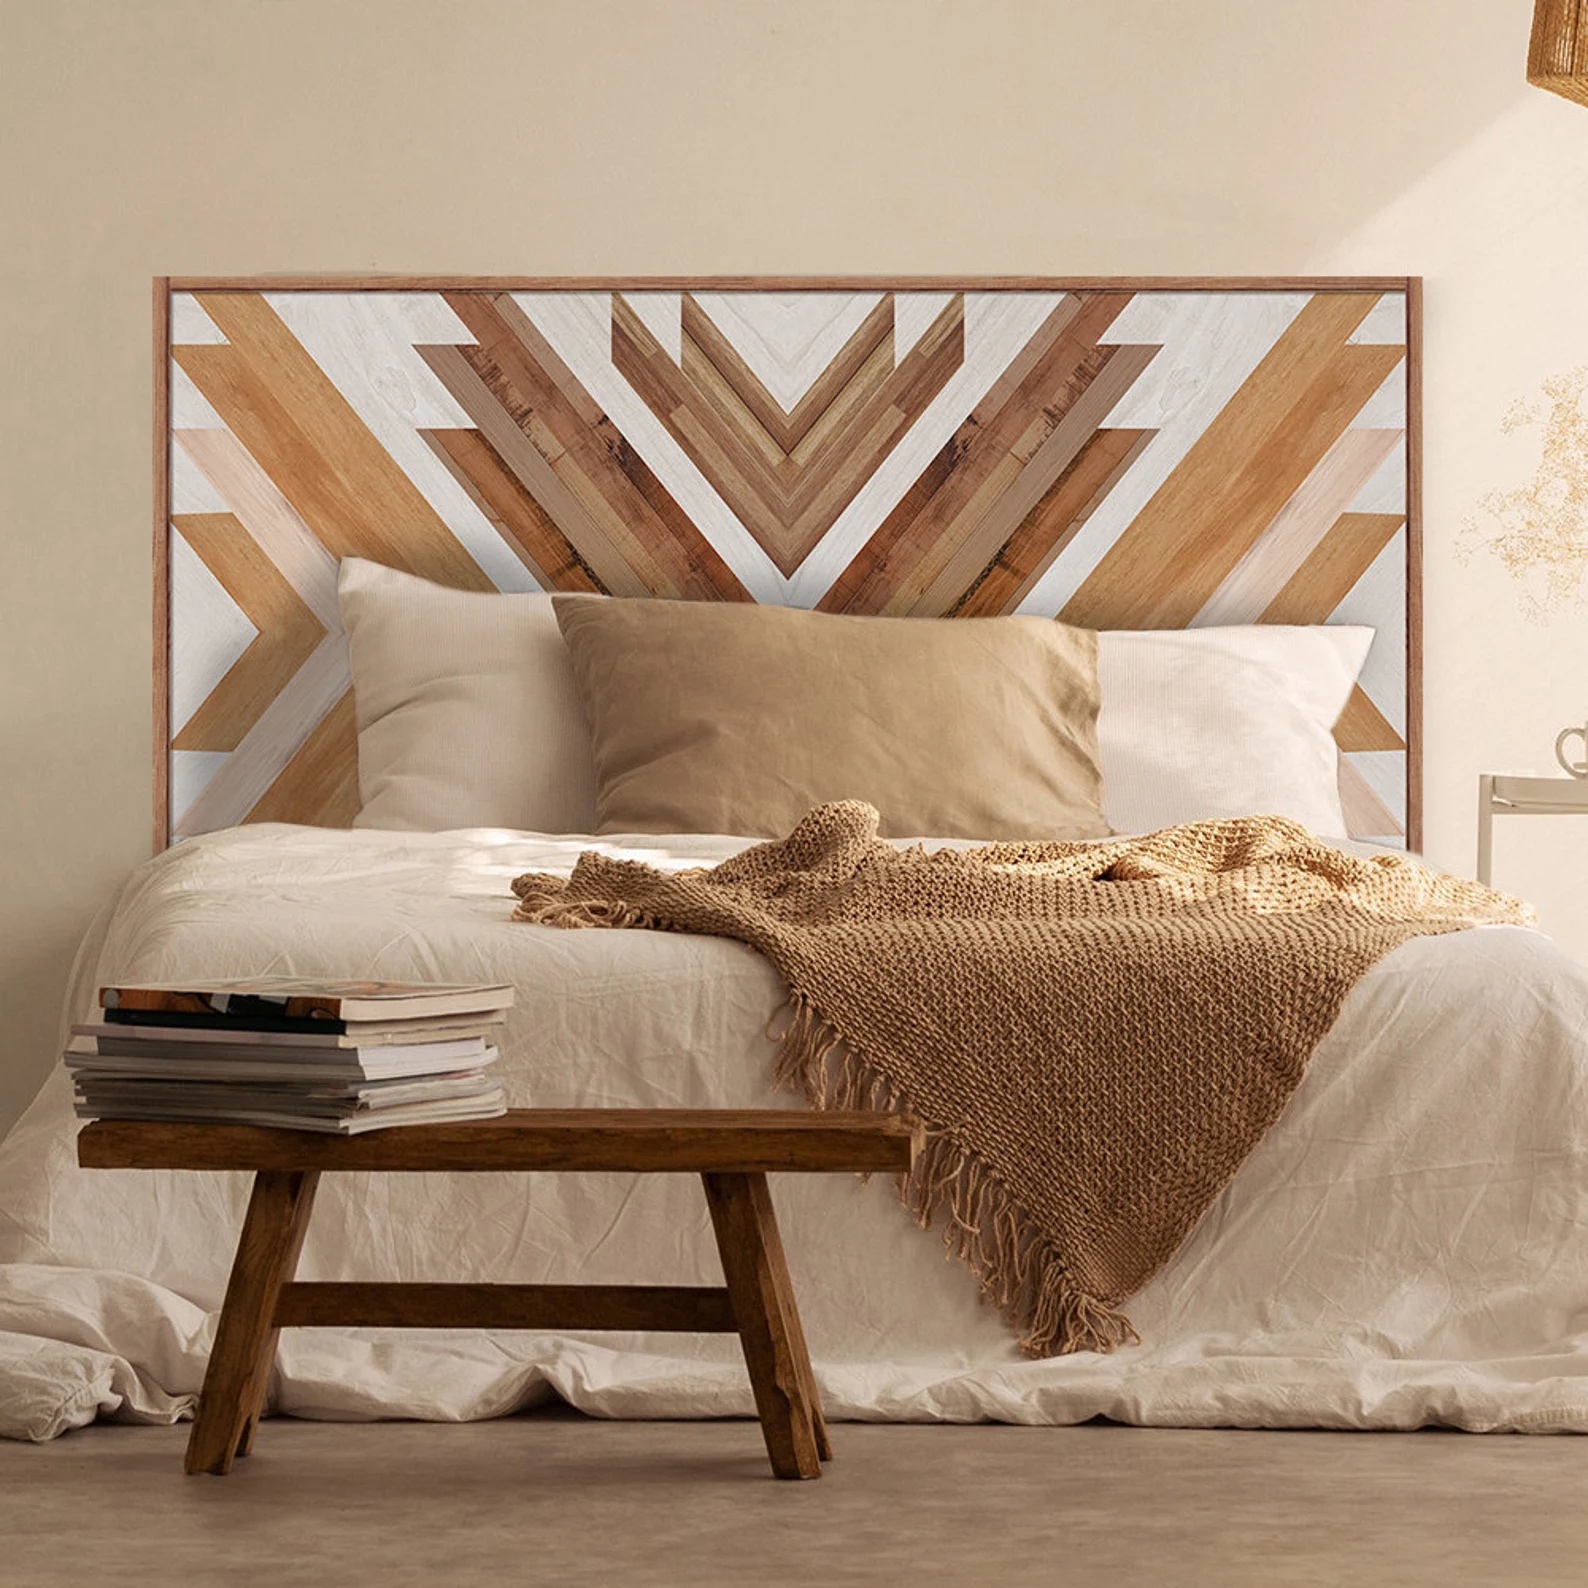 Etsy renew old wood furniture furniture wallpaper on headboard